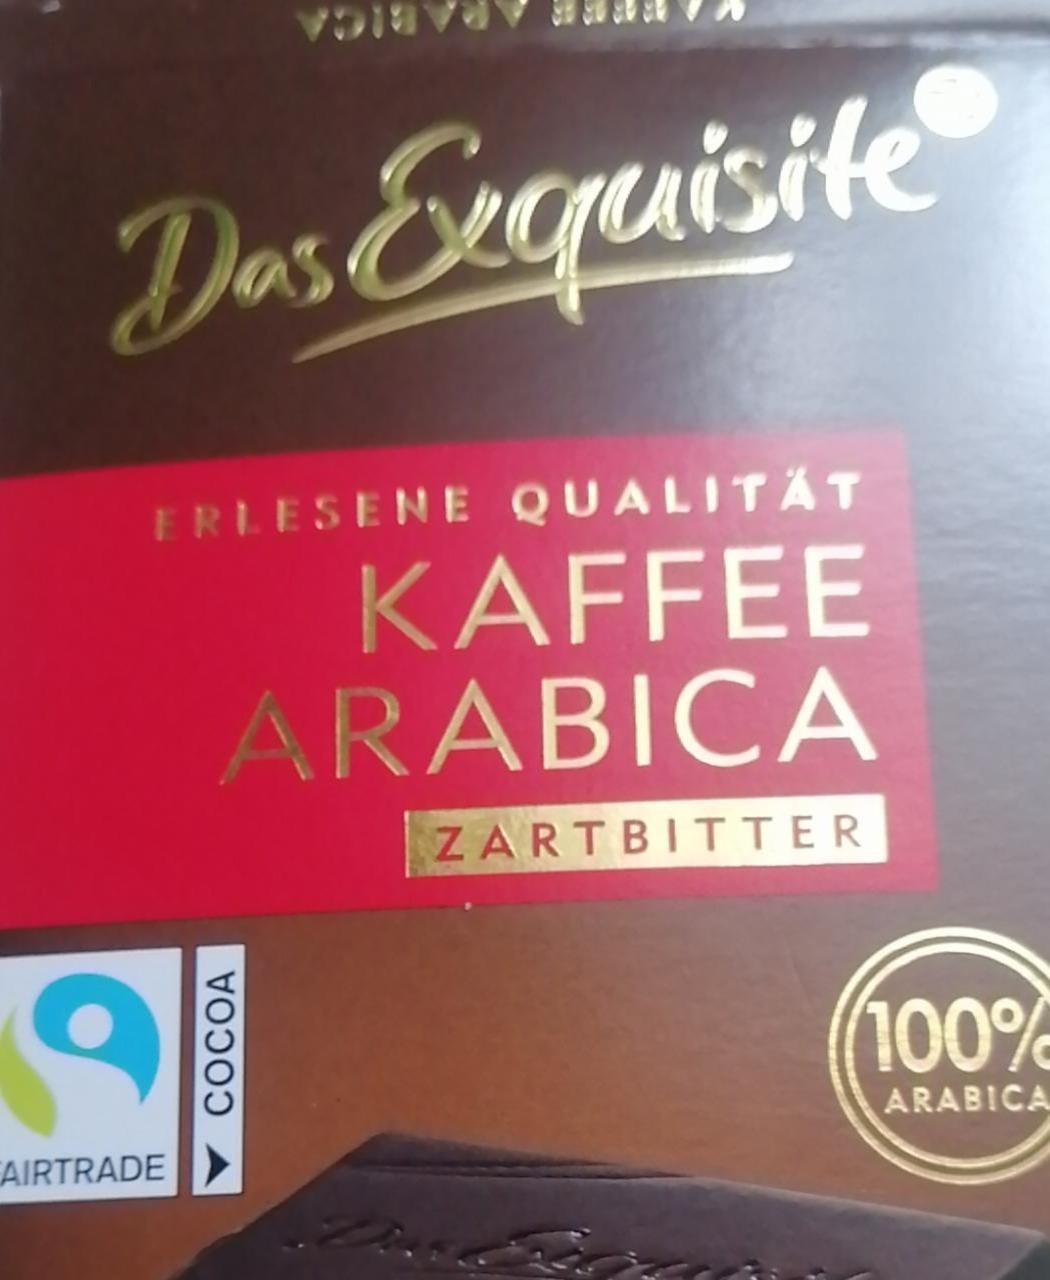 Zdjęcia - DasExquisite Kaffe Arabica